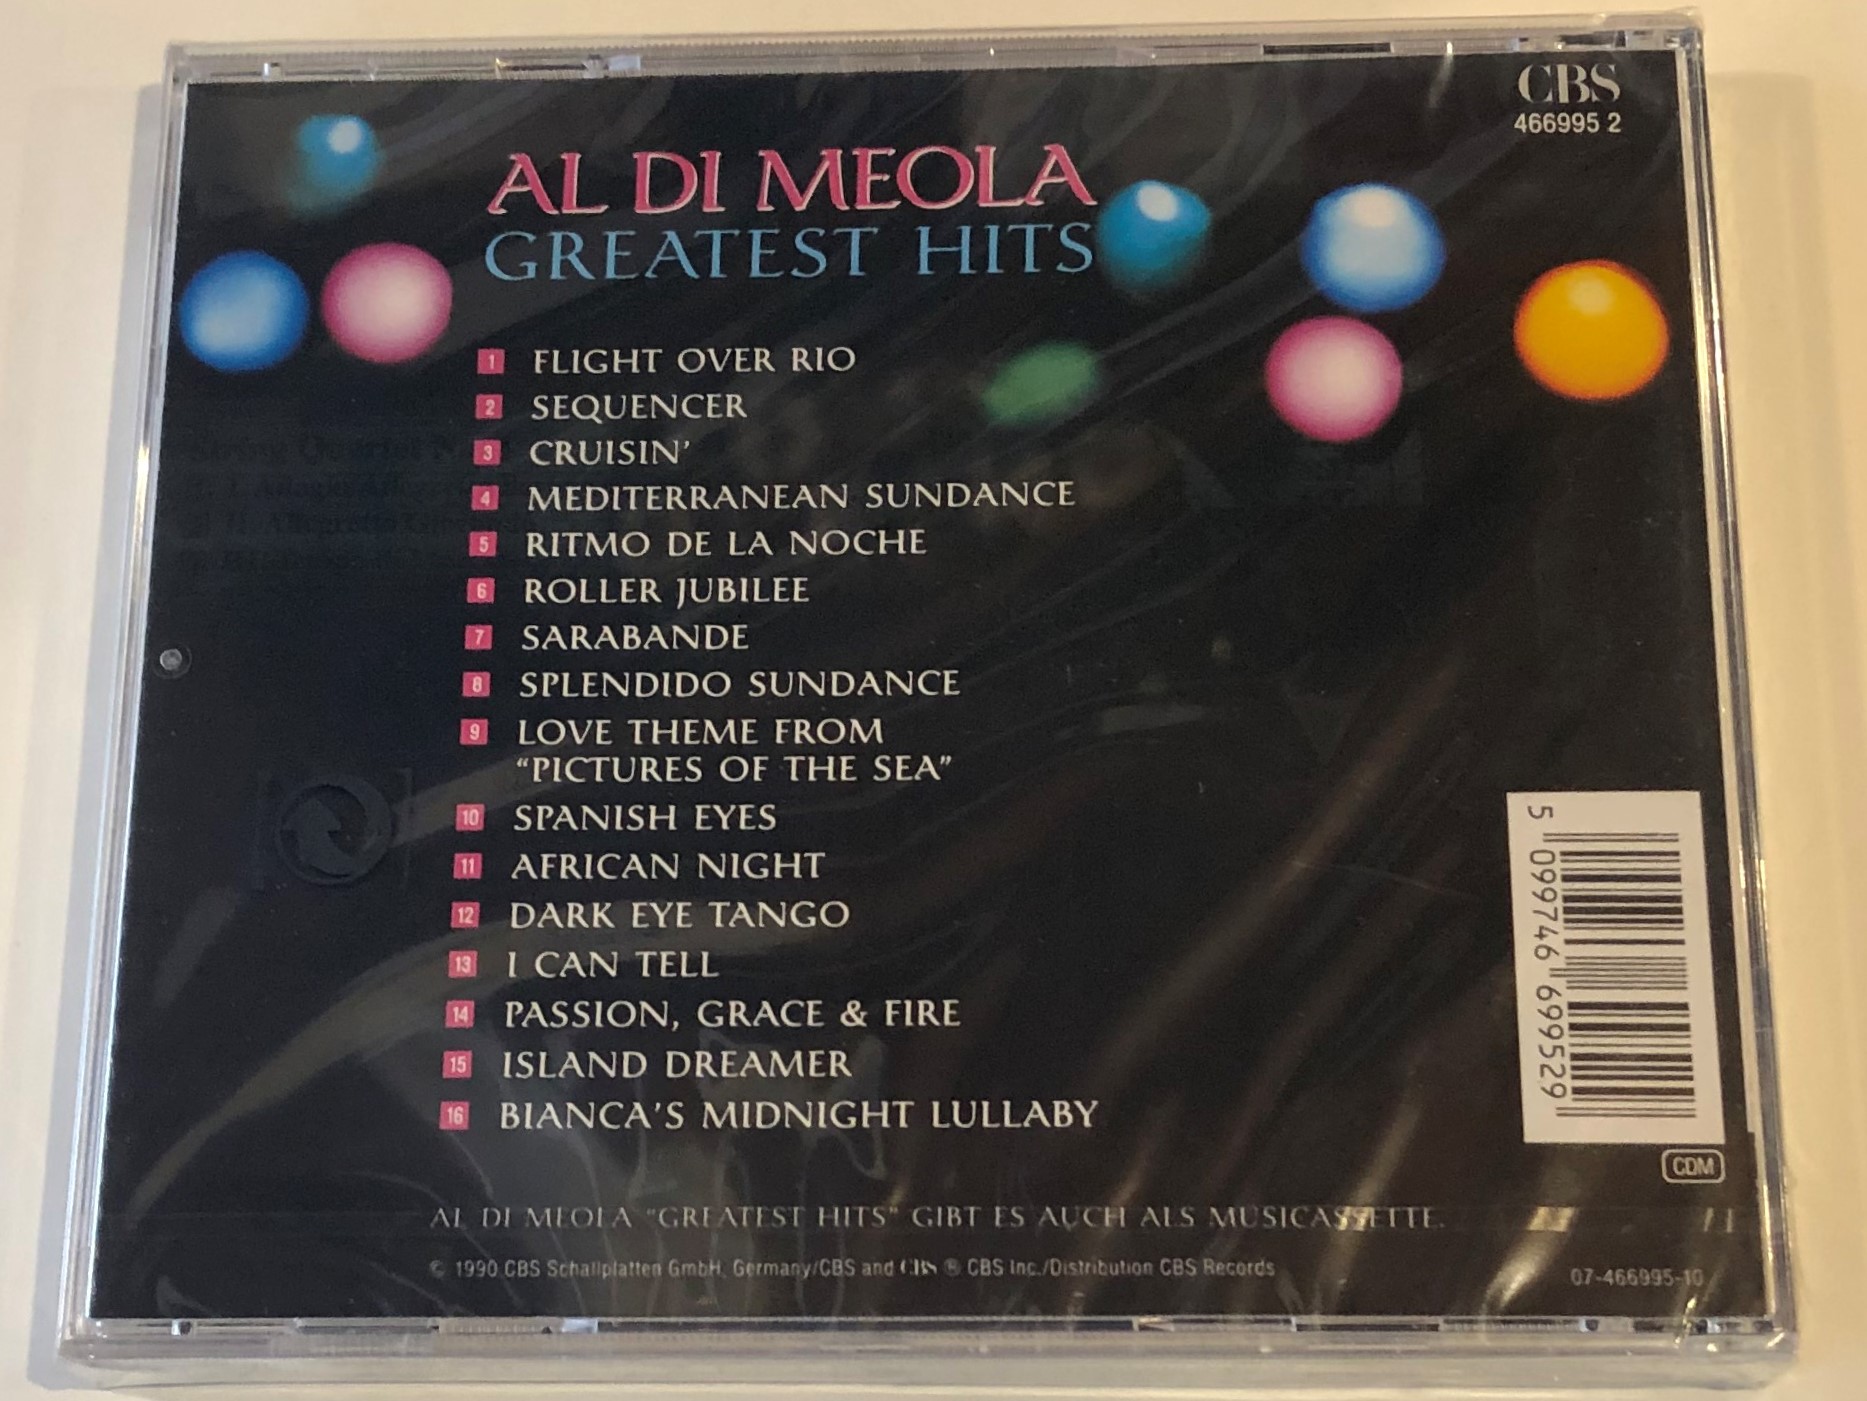 al-di-meola-greatest-hits-cbs-audio-cd-1990-466995-2-2-.jpg